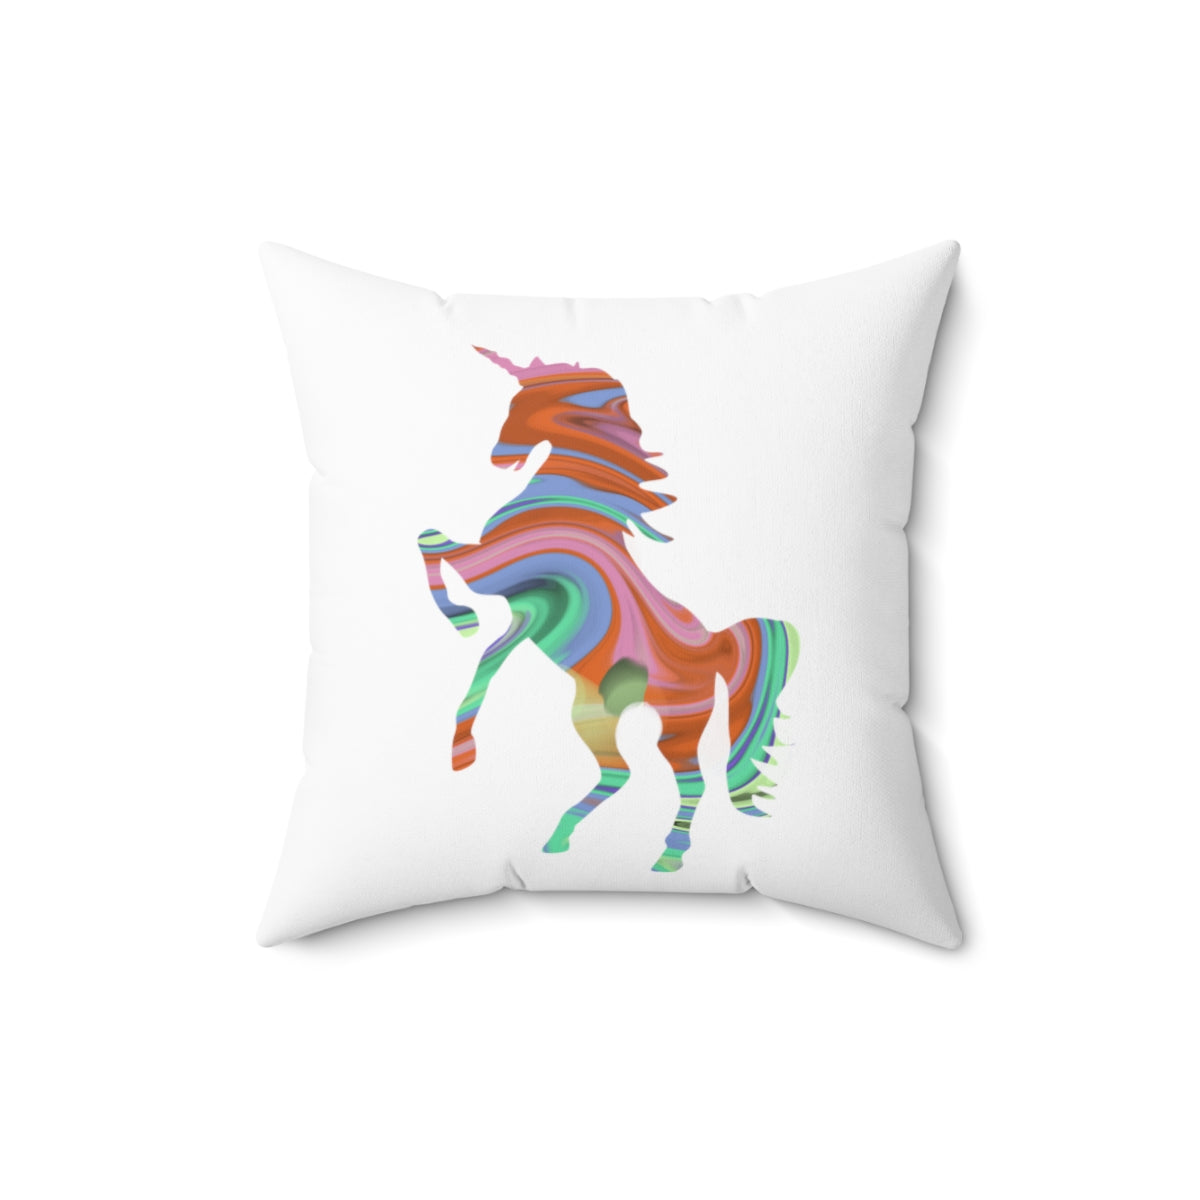 Unicorn Square Throw Pillow - Tortuna